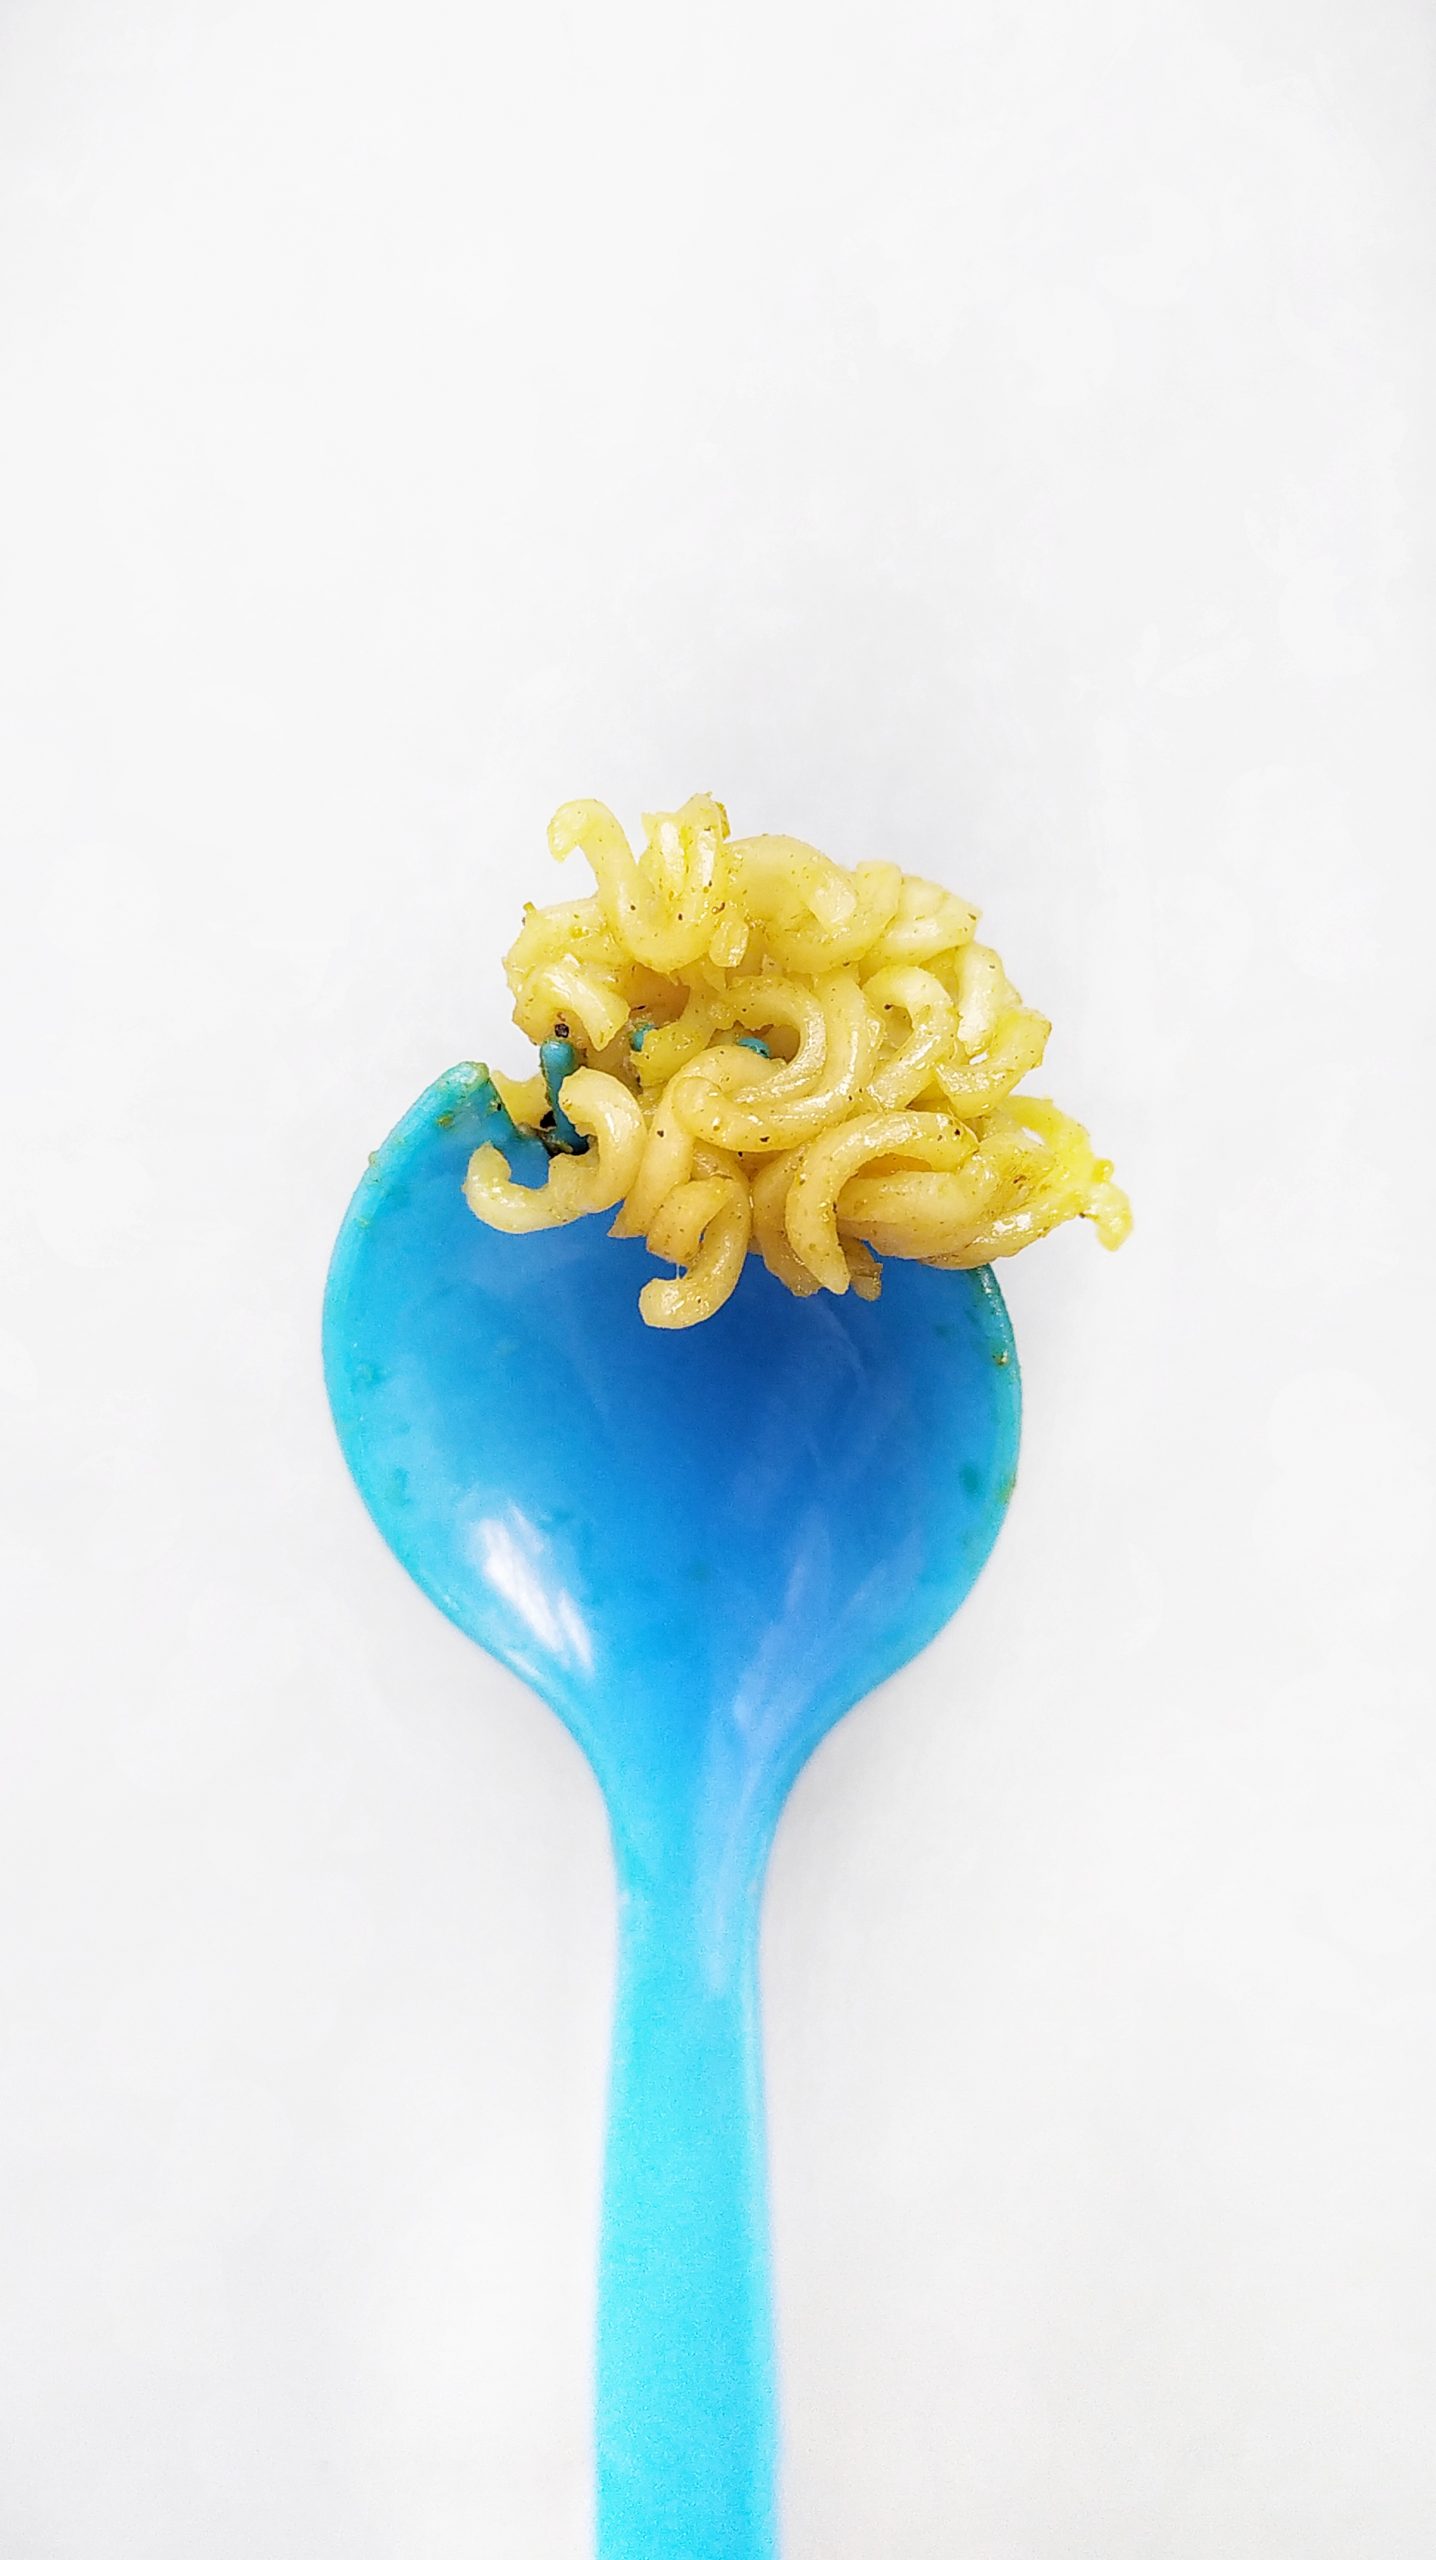 Portrait of a noodle on a fork